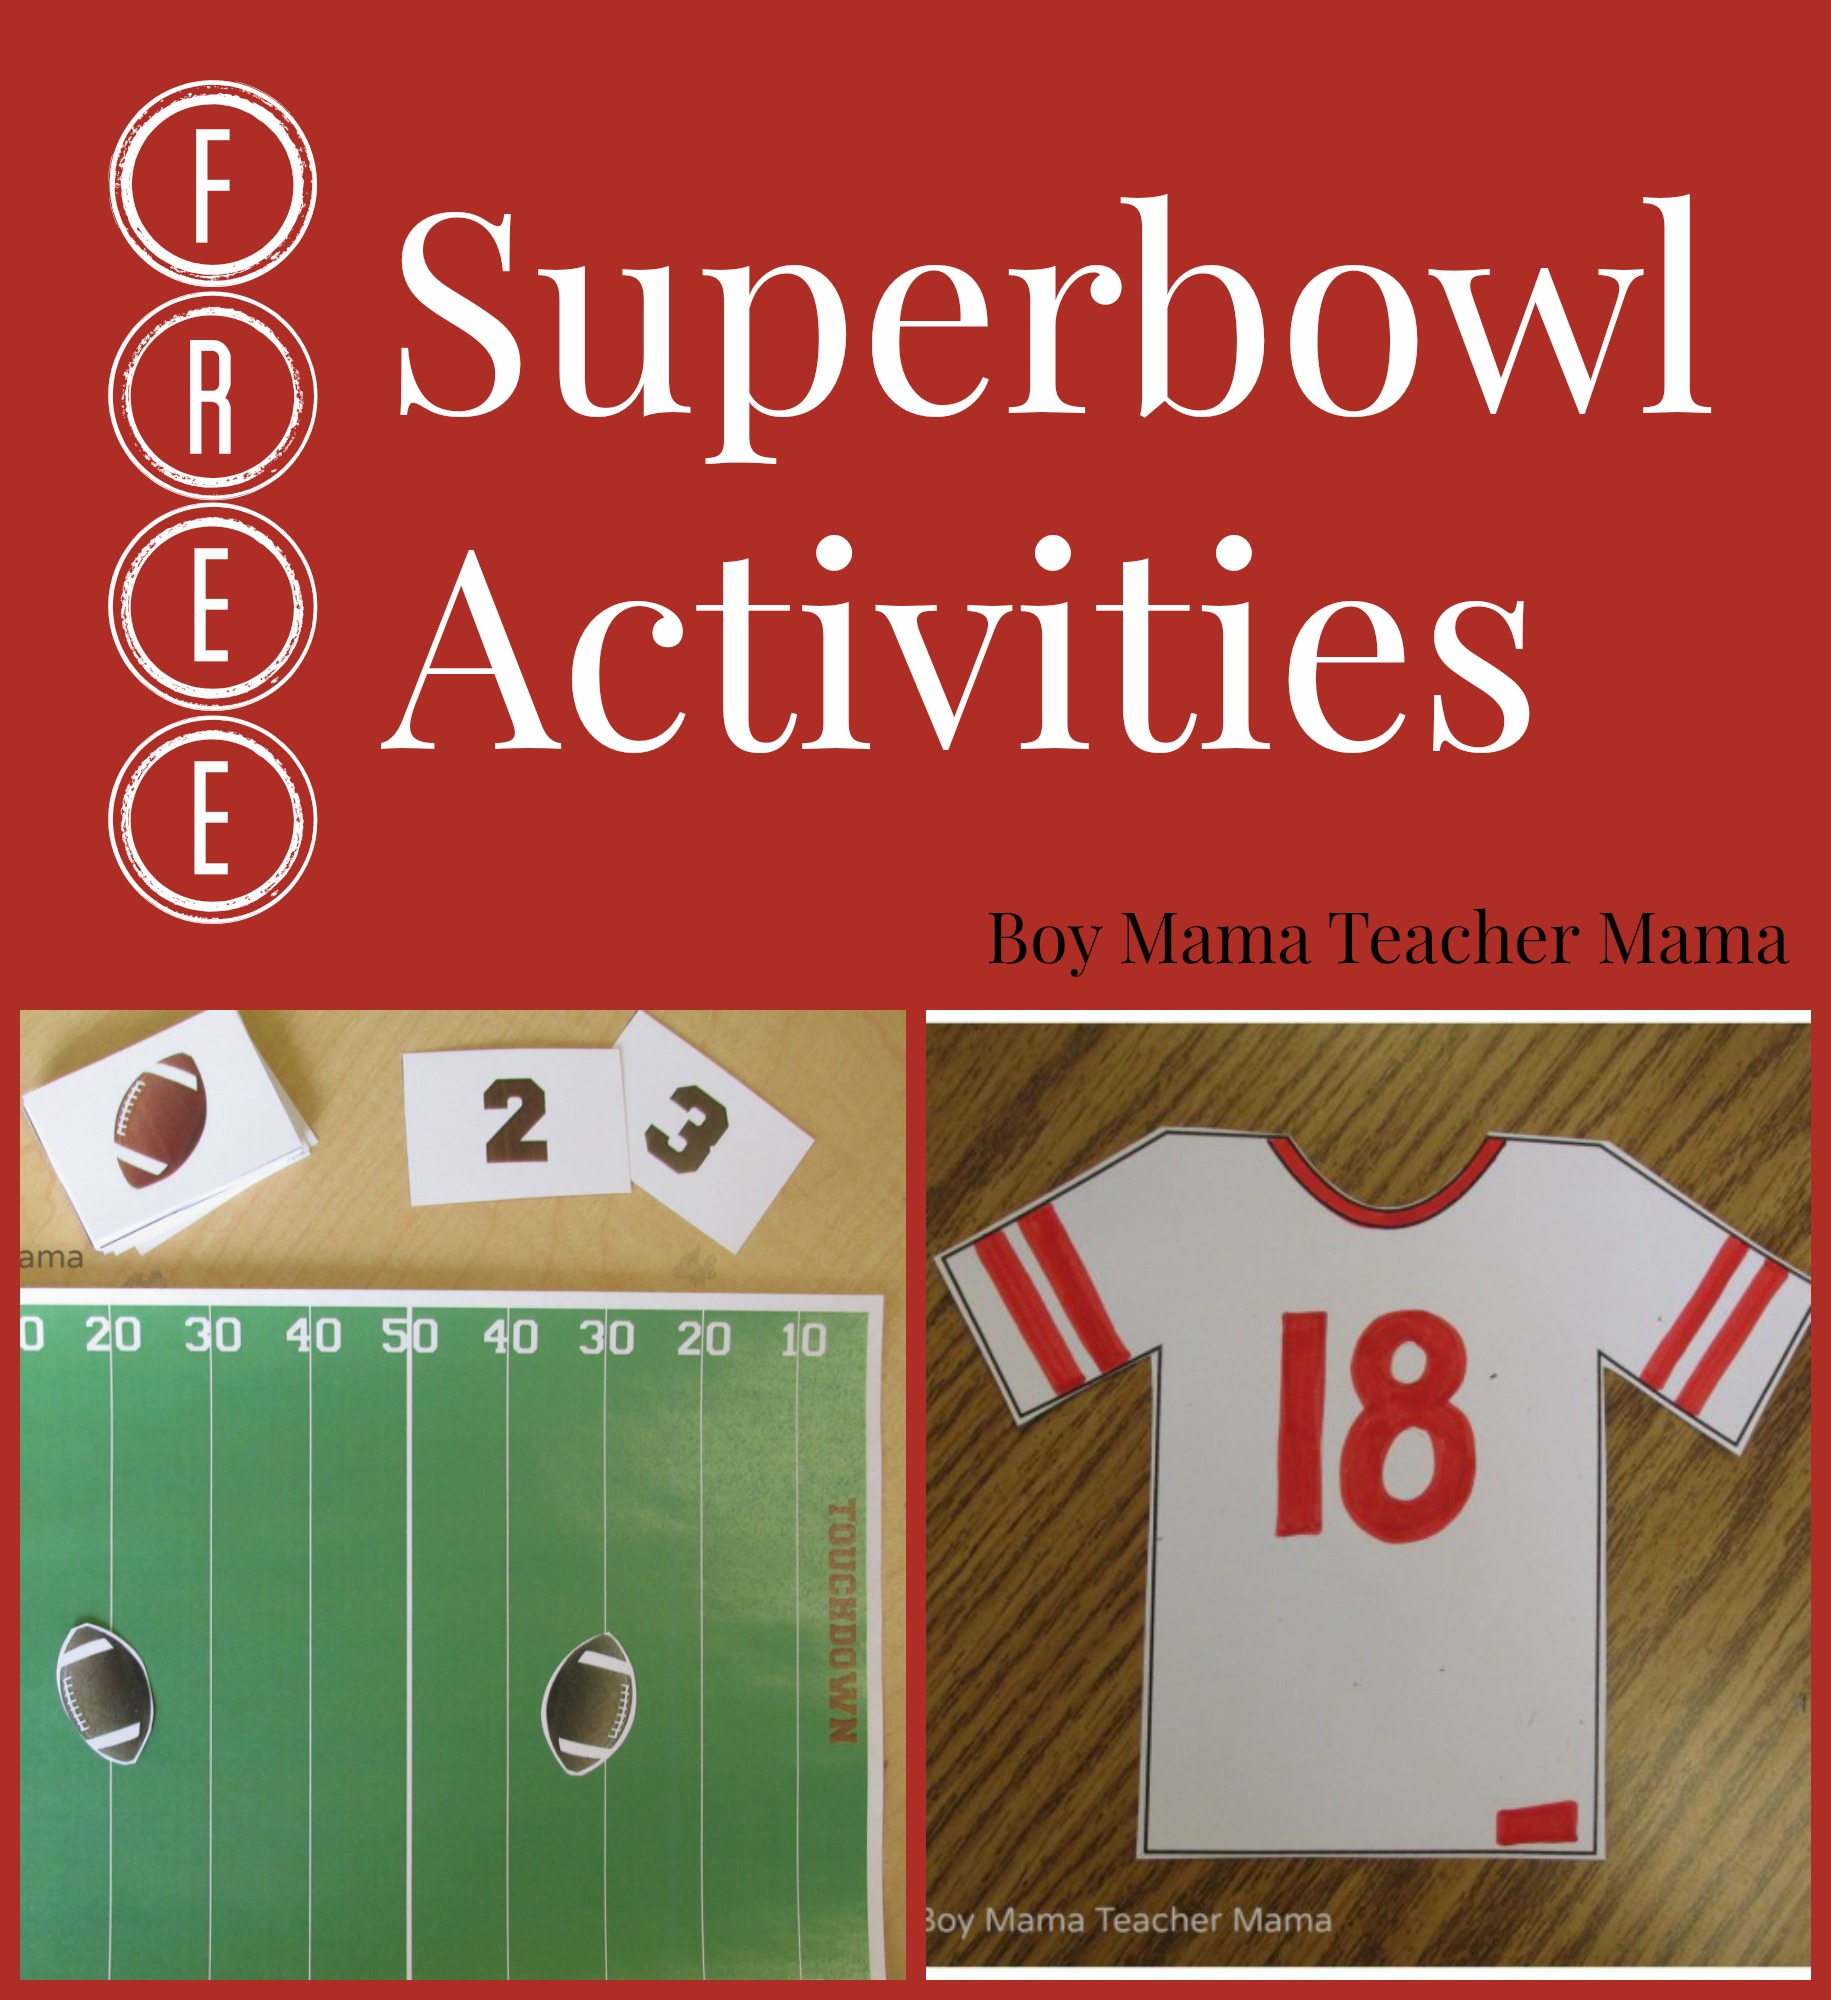 teacher-mama-free-superbowl-activities-boy-mama-teacher-mama